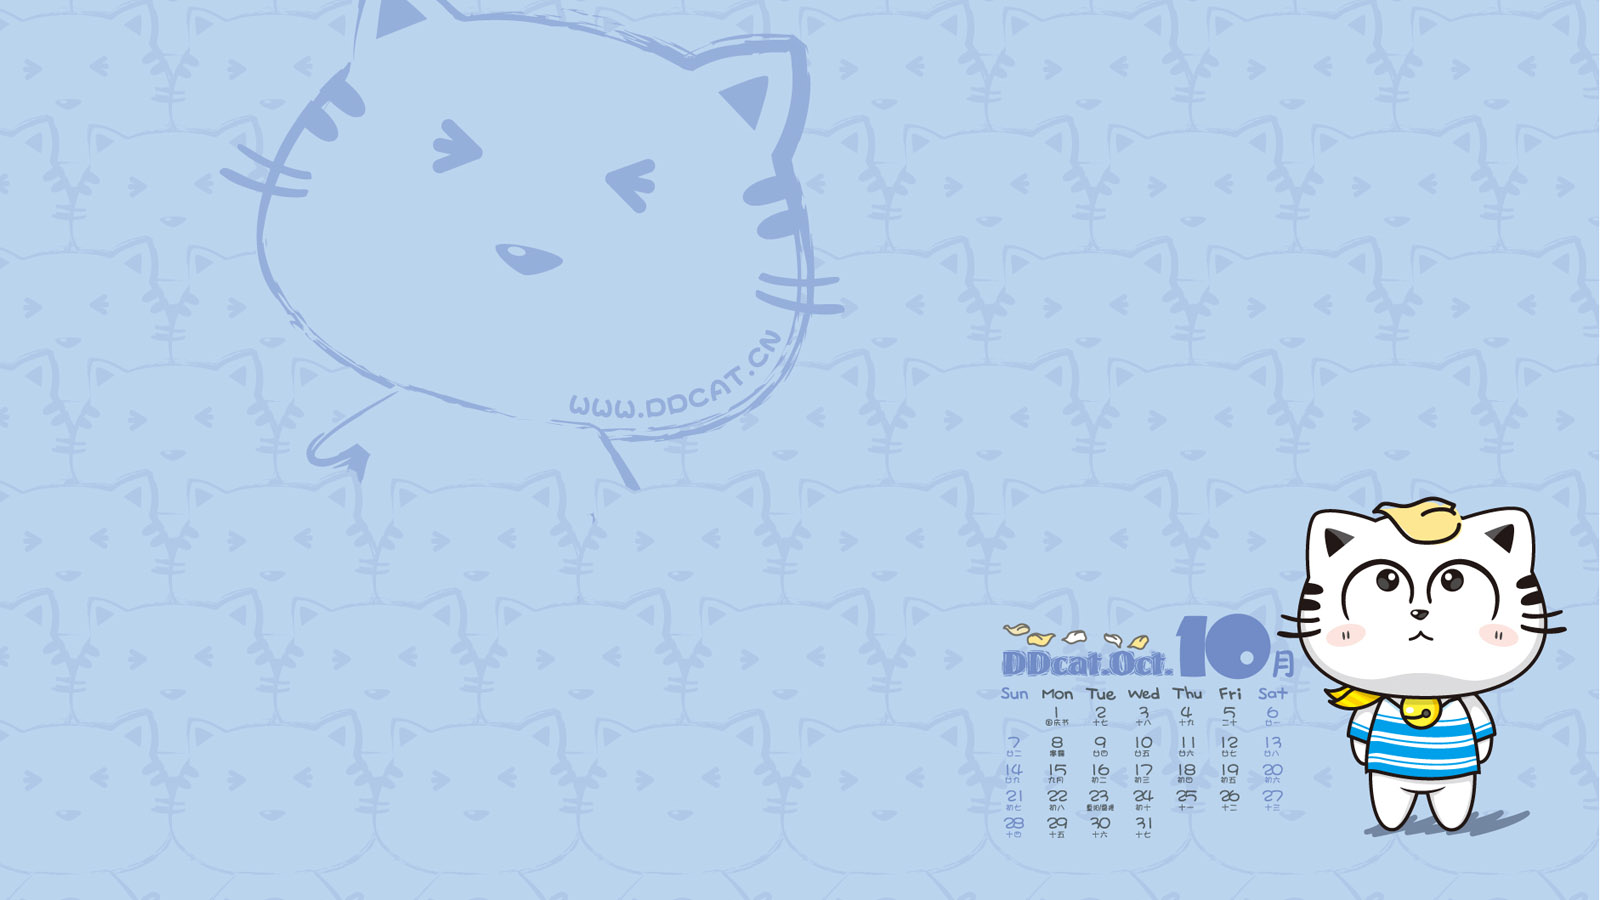 Ding Dong cat October 2012 calendar wallpaper